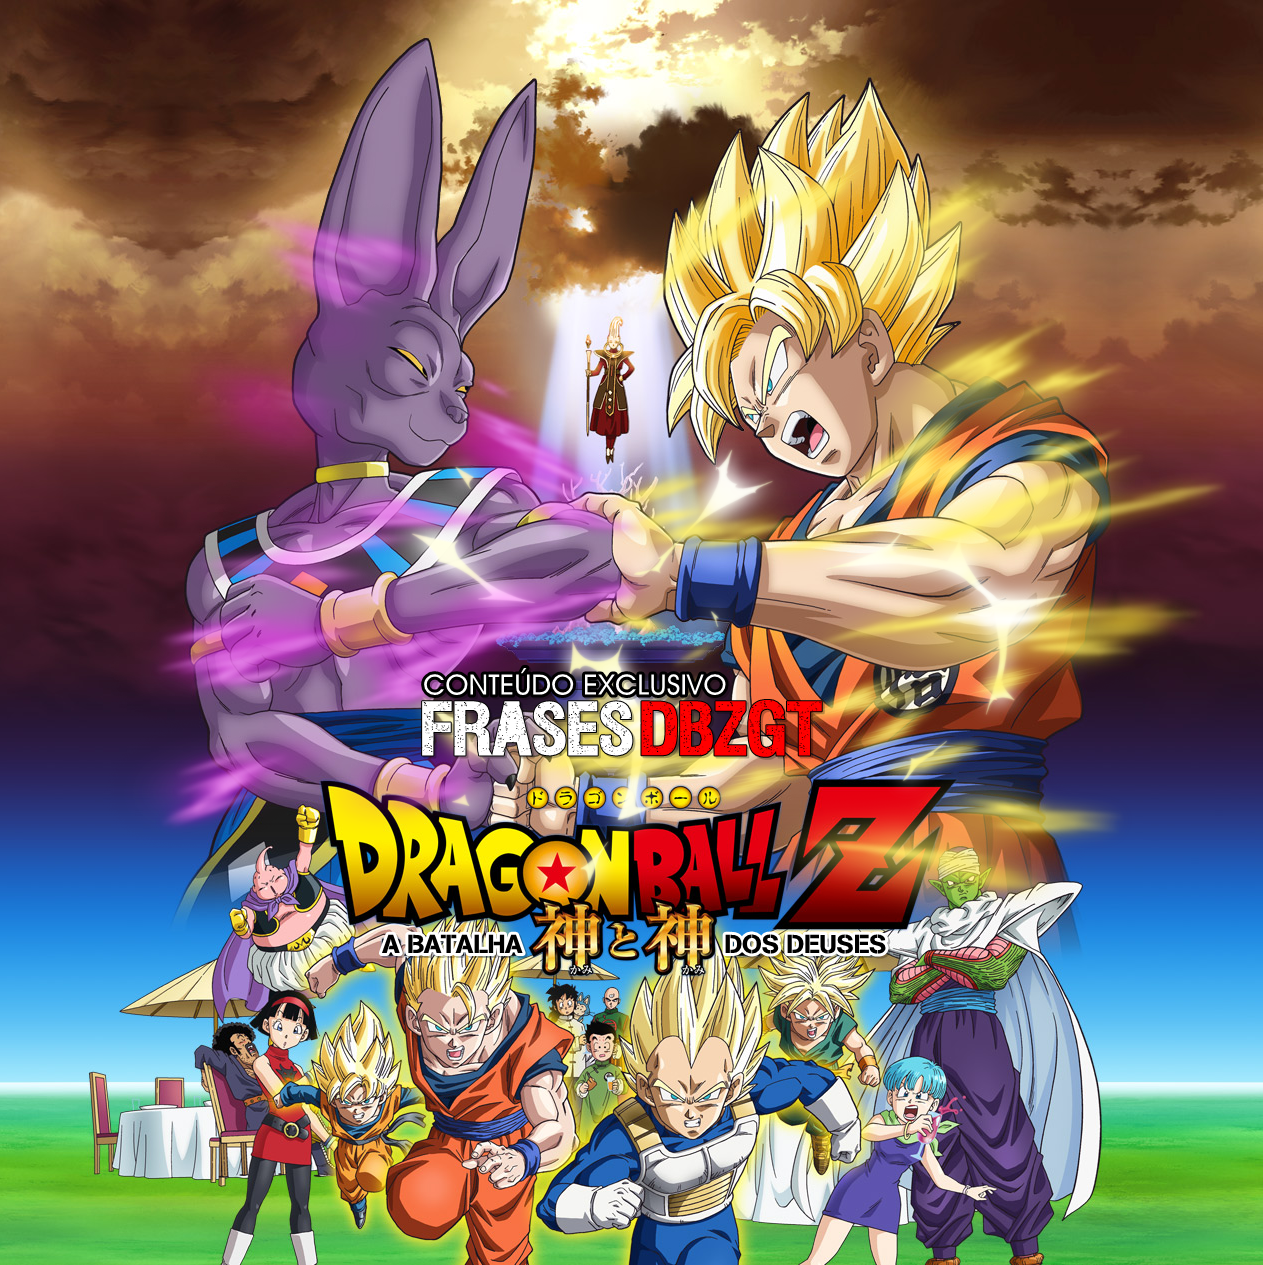 Frases DBZGT: Dragon Ball Z: Battle Of Gods (Batalha dos Deuses) - Pôster Oficial no Brasil